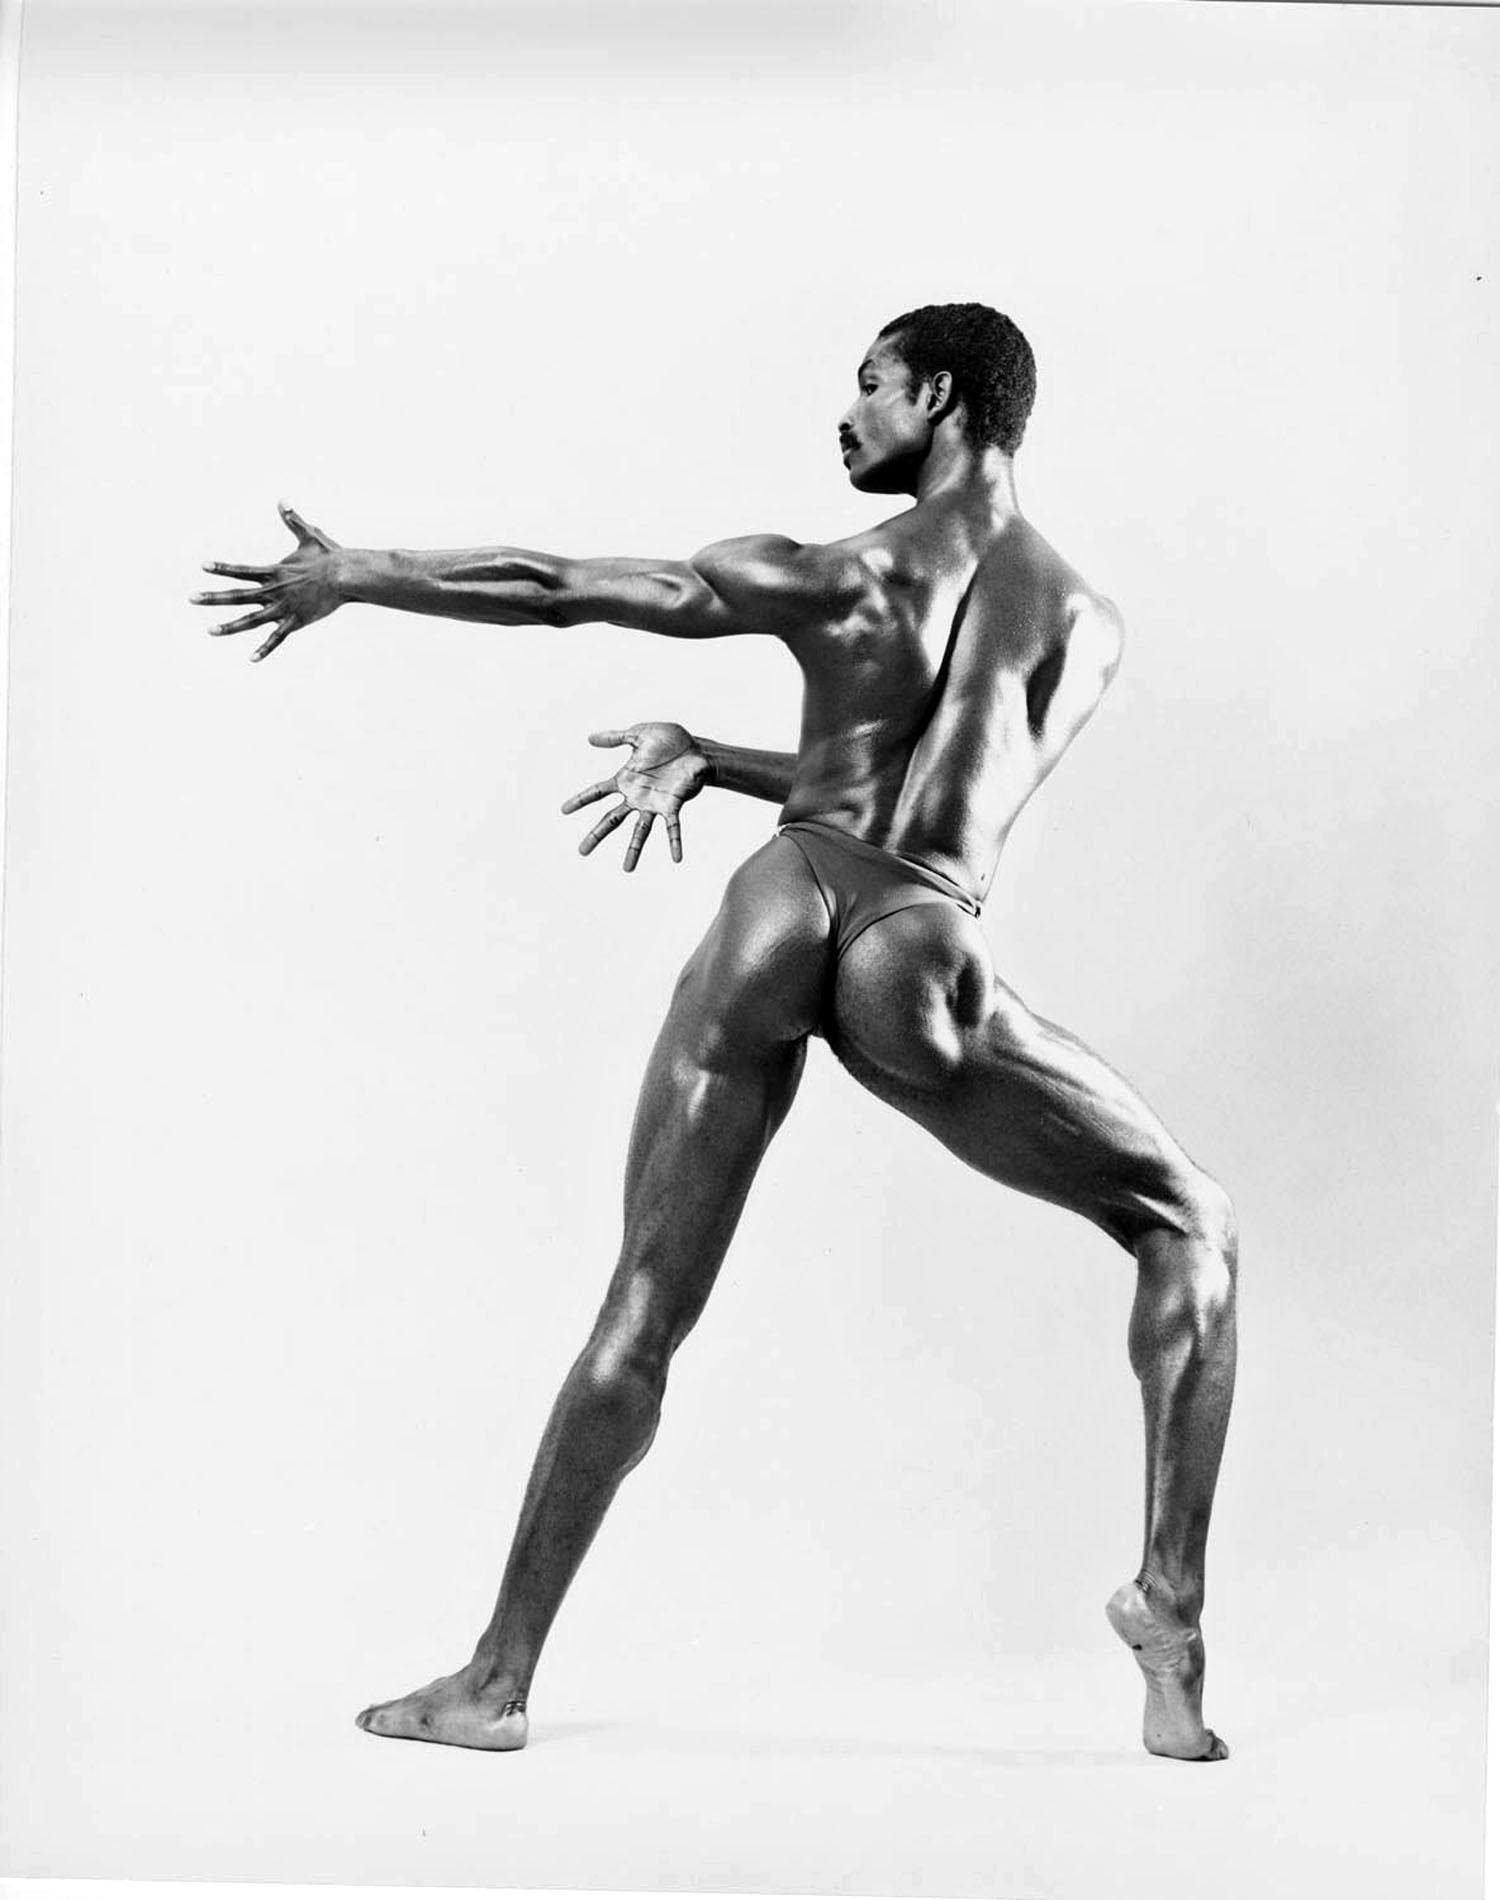 Jack Mitchell Black and White Photograph - Dance Theatre of Harlem dancer Roman Brooks